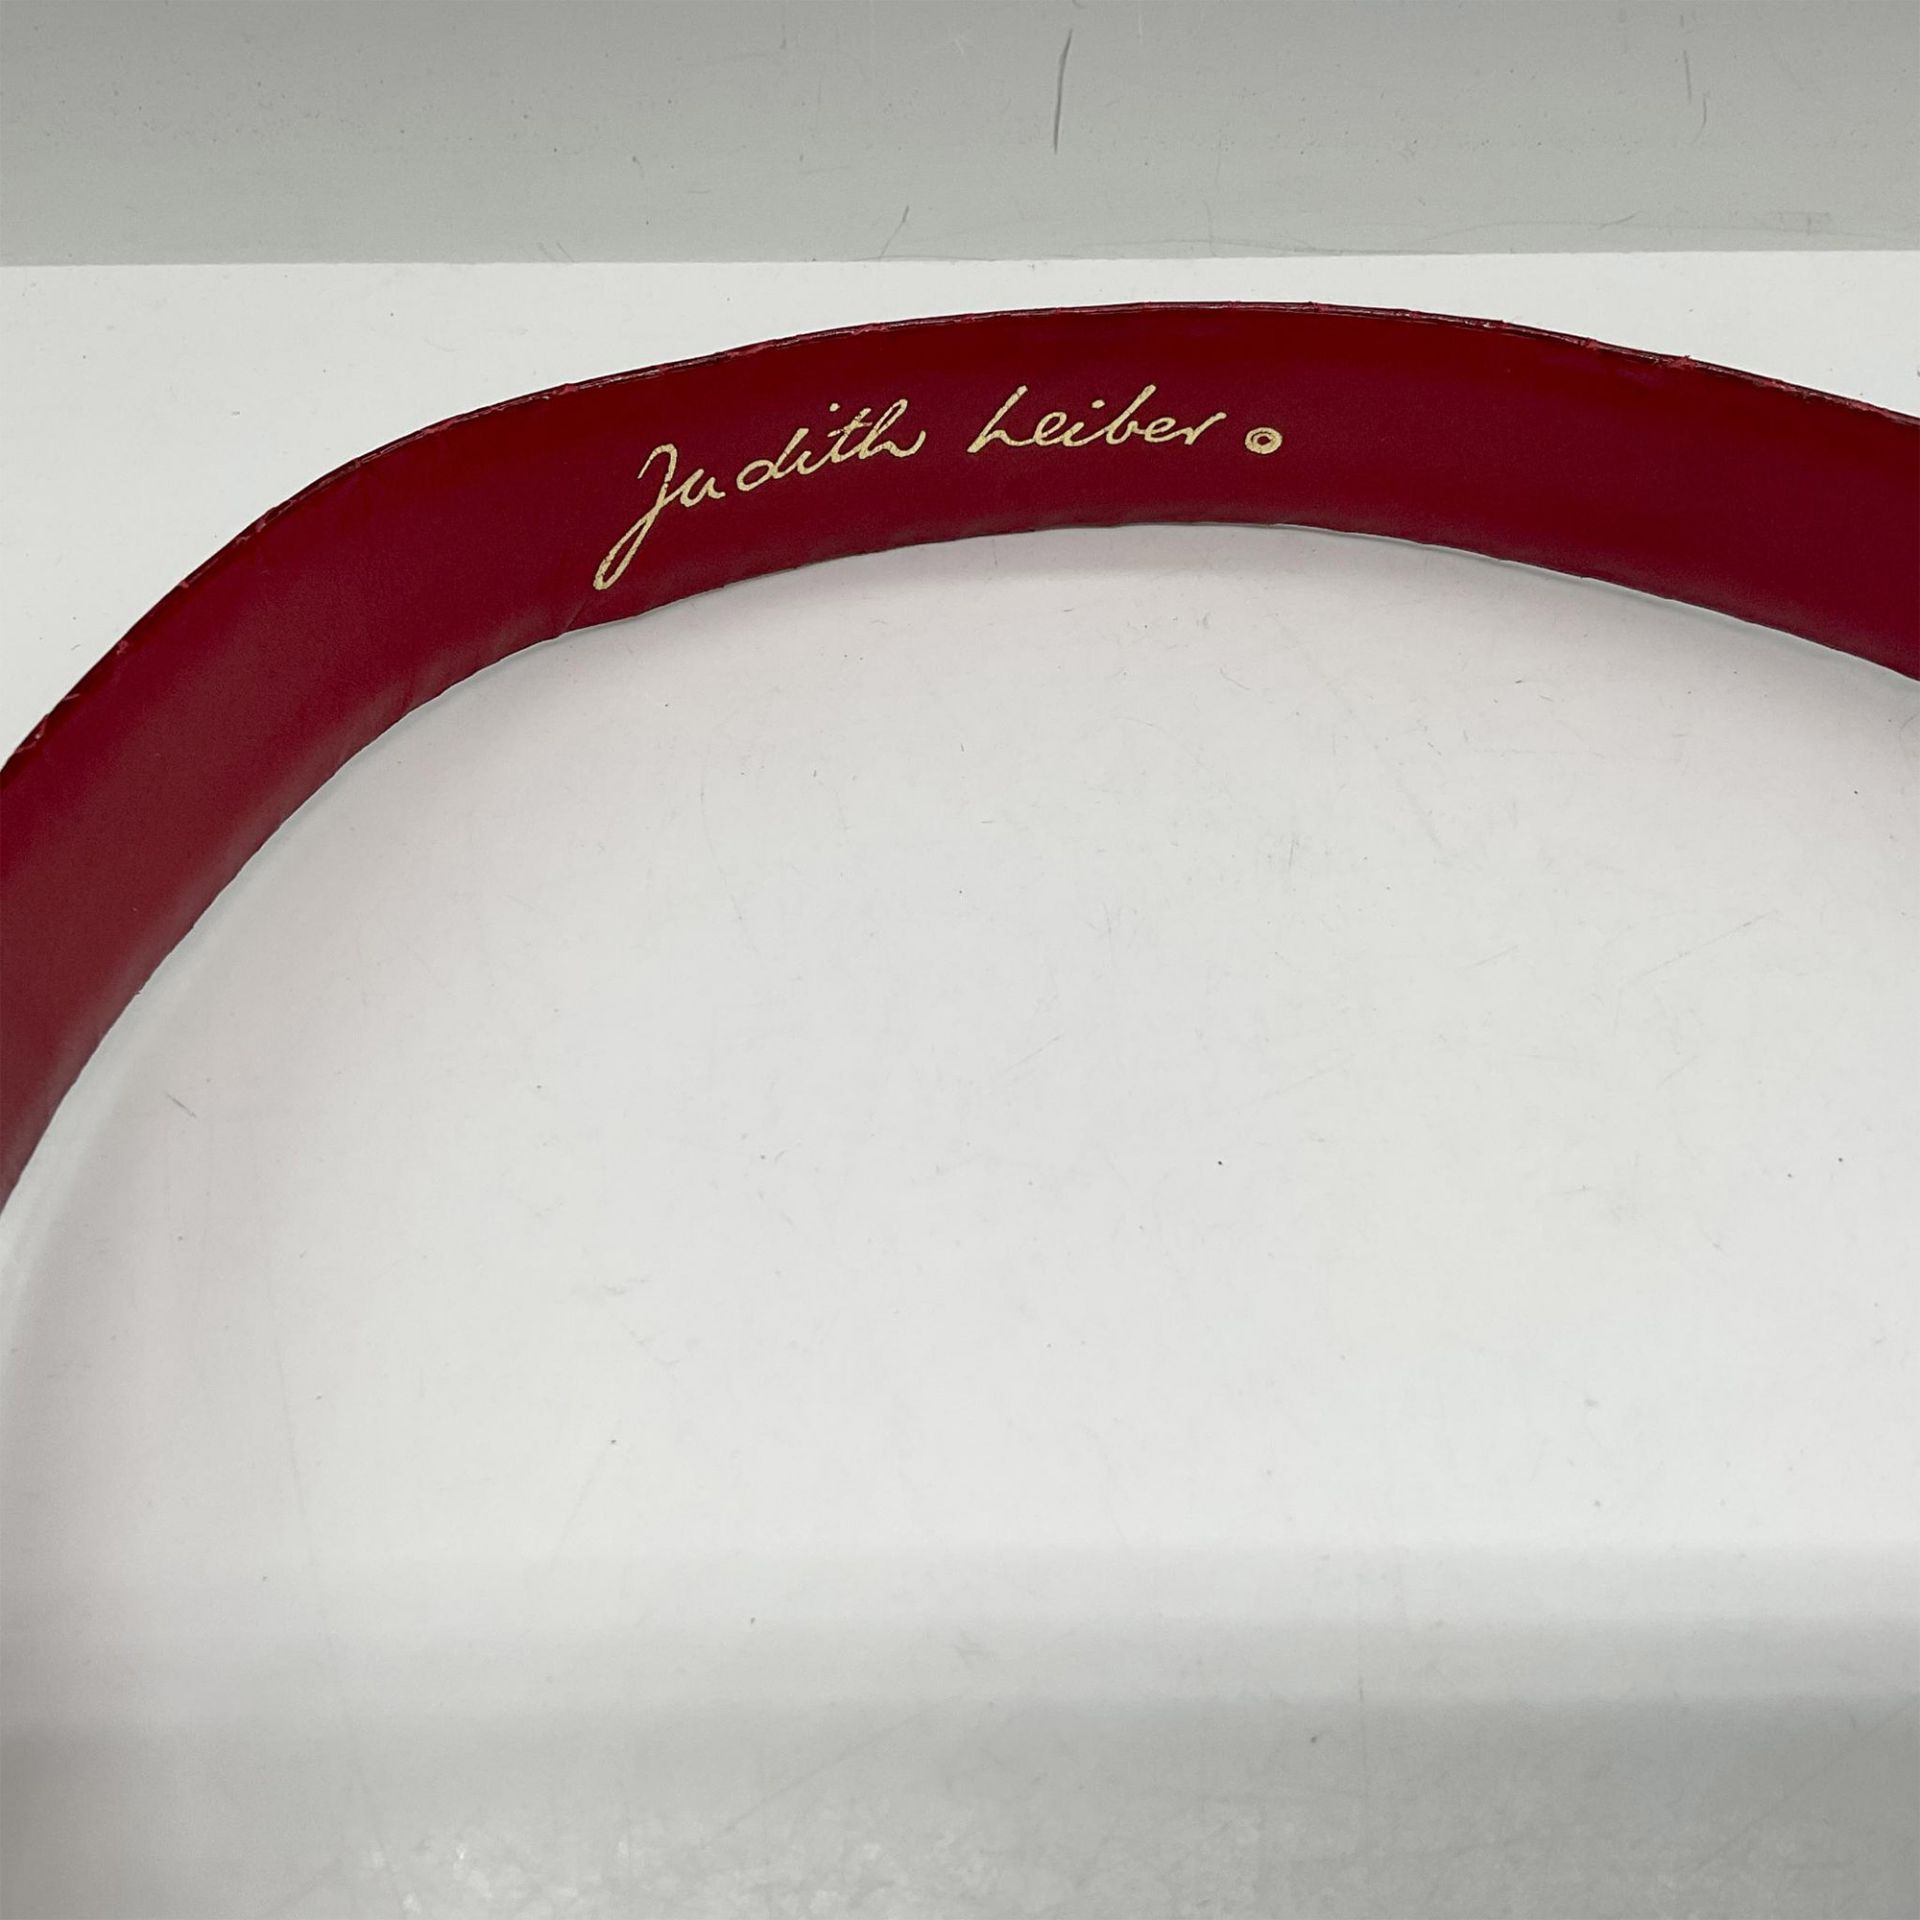 Judith Leiber Red Snakeskin Belt, Size Small - Image 2 of 2